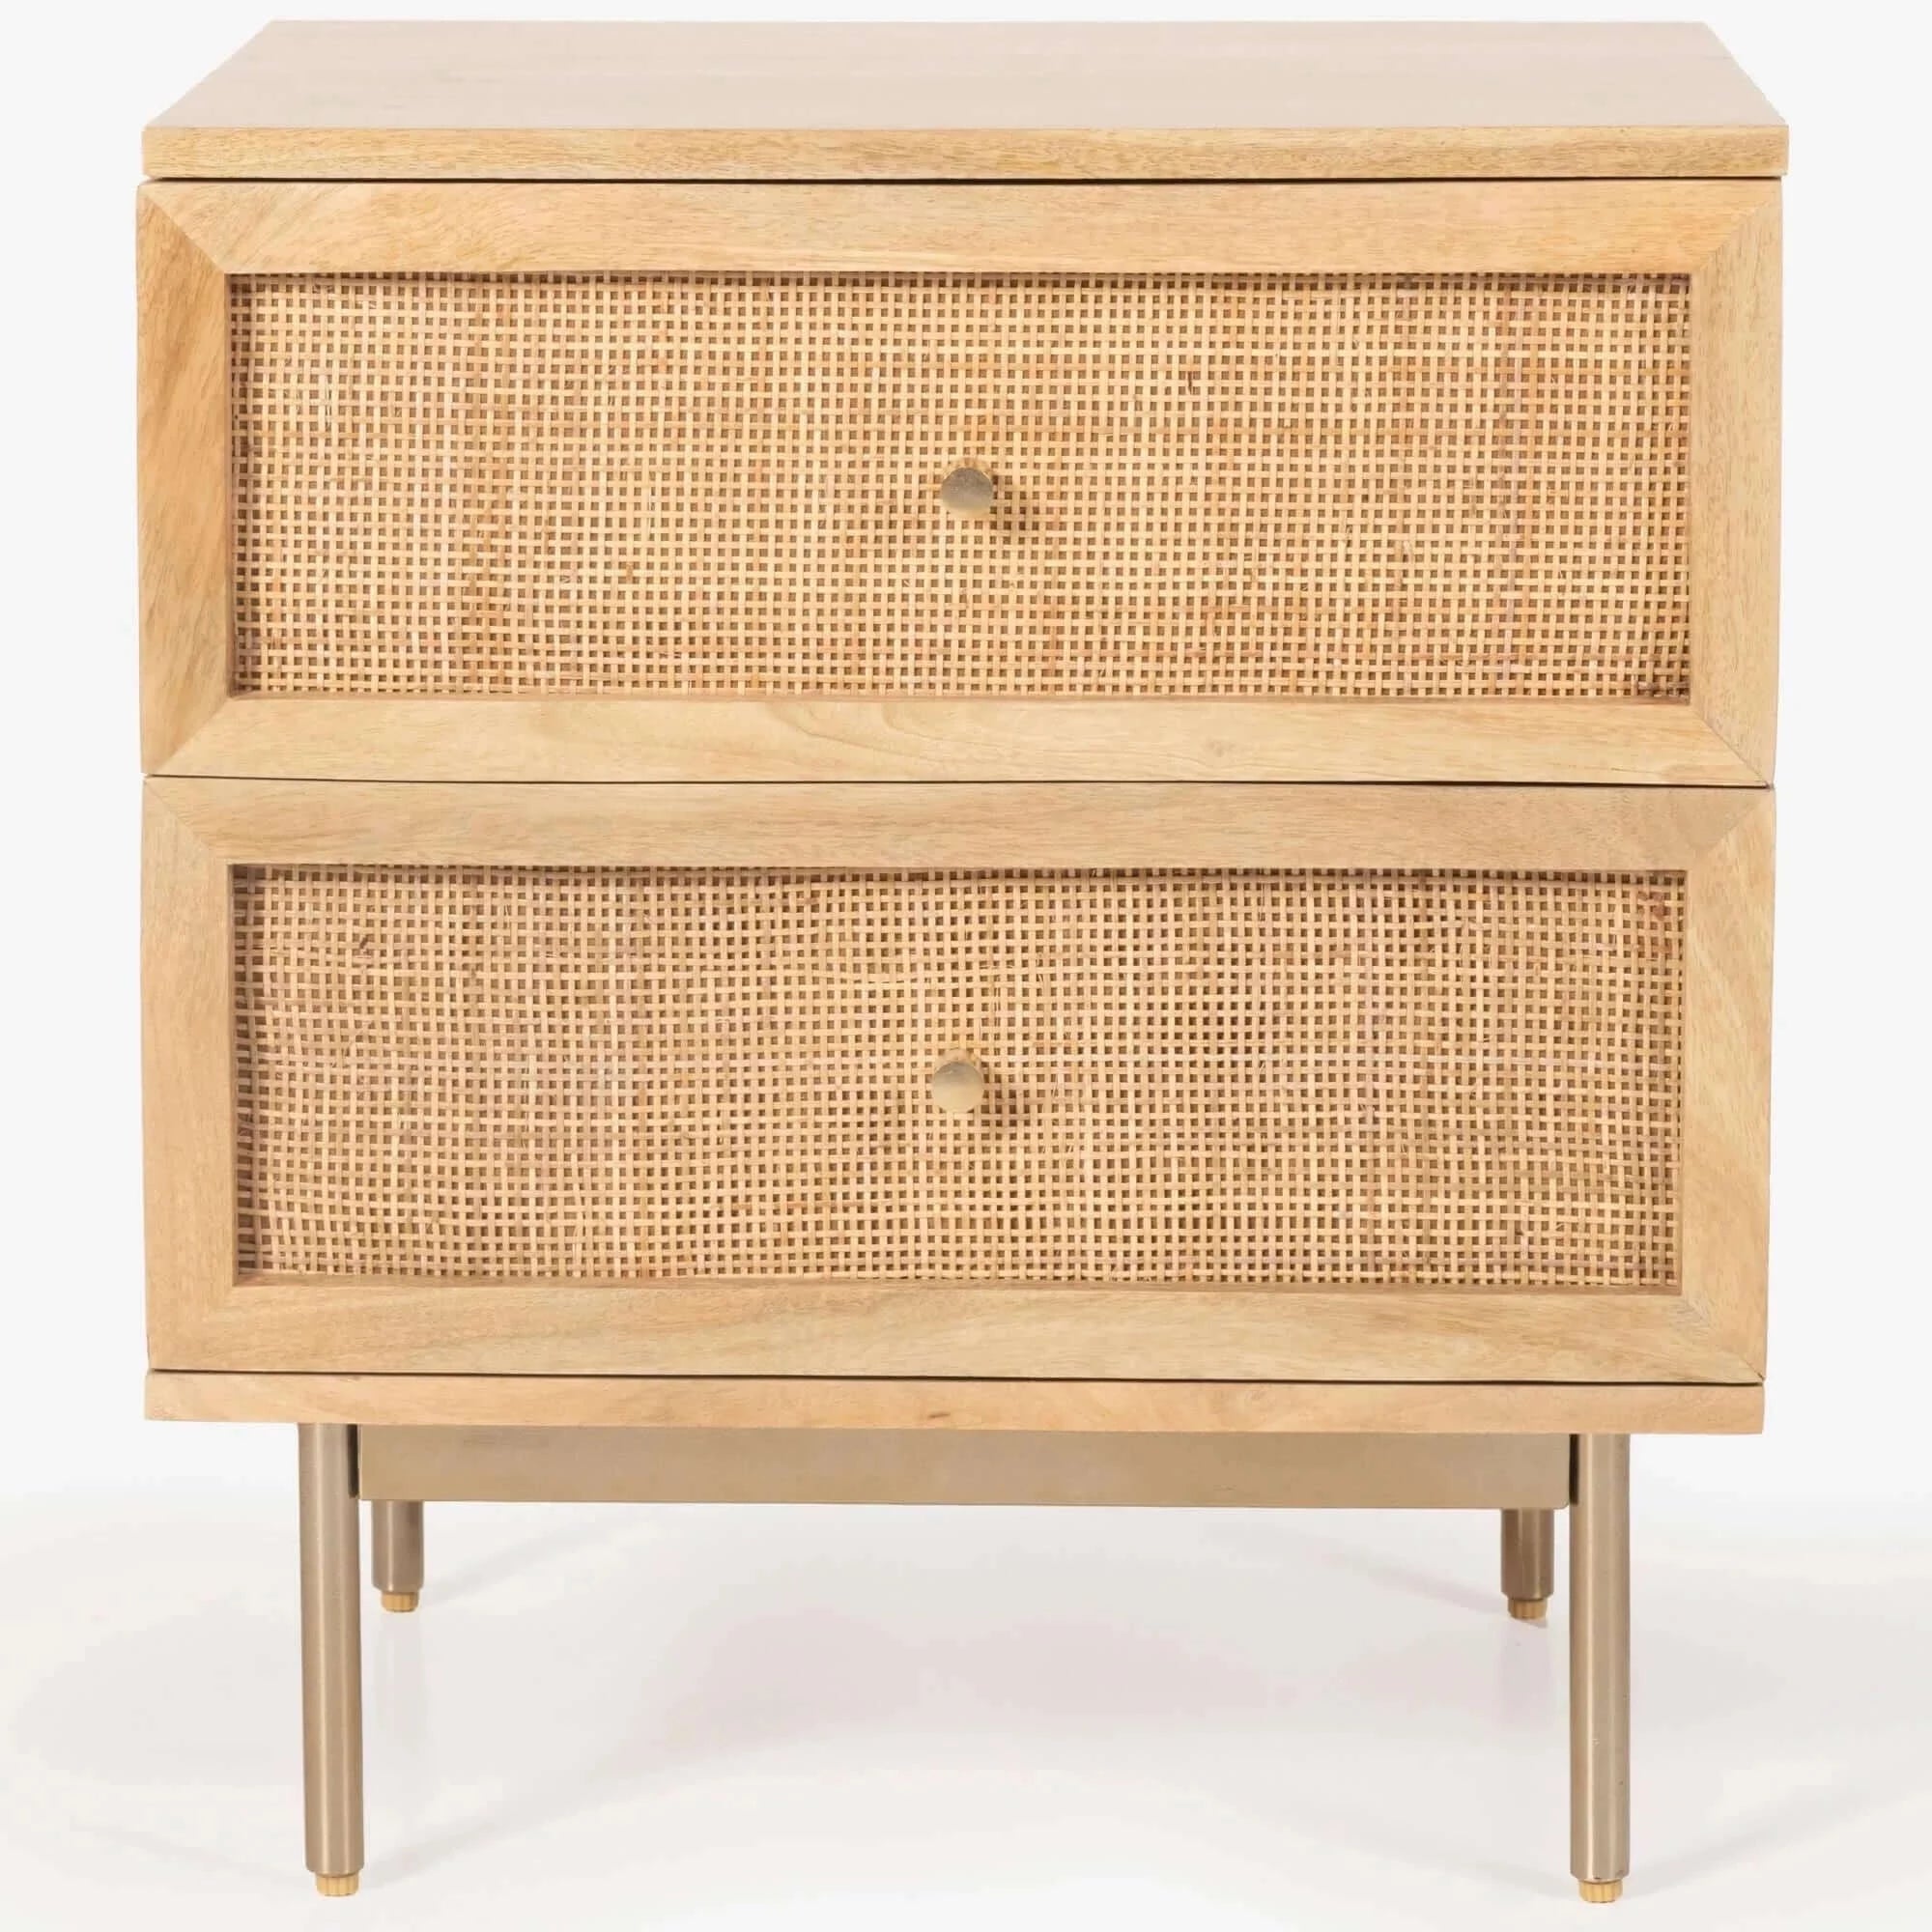 Buy martina set of 2 bedside table 2 drawer storage cabinet solid mango wood rattan - upinteriors-Upinteriors